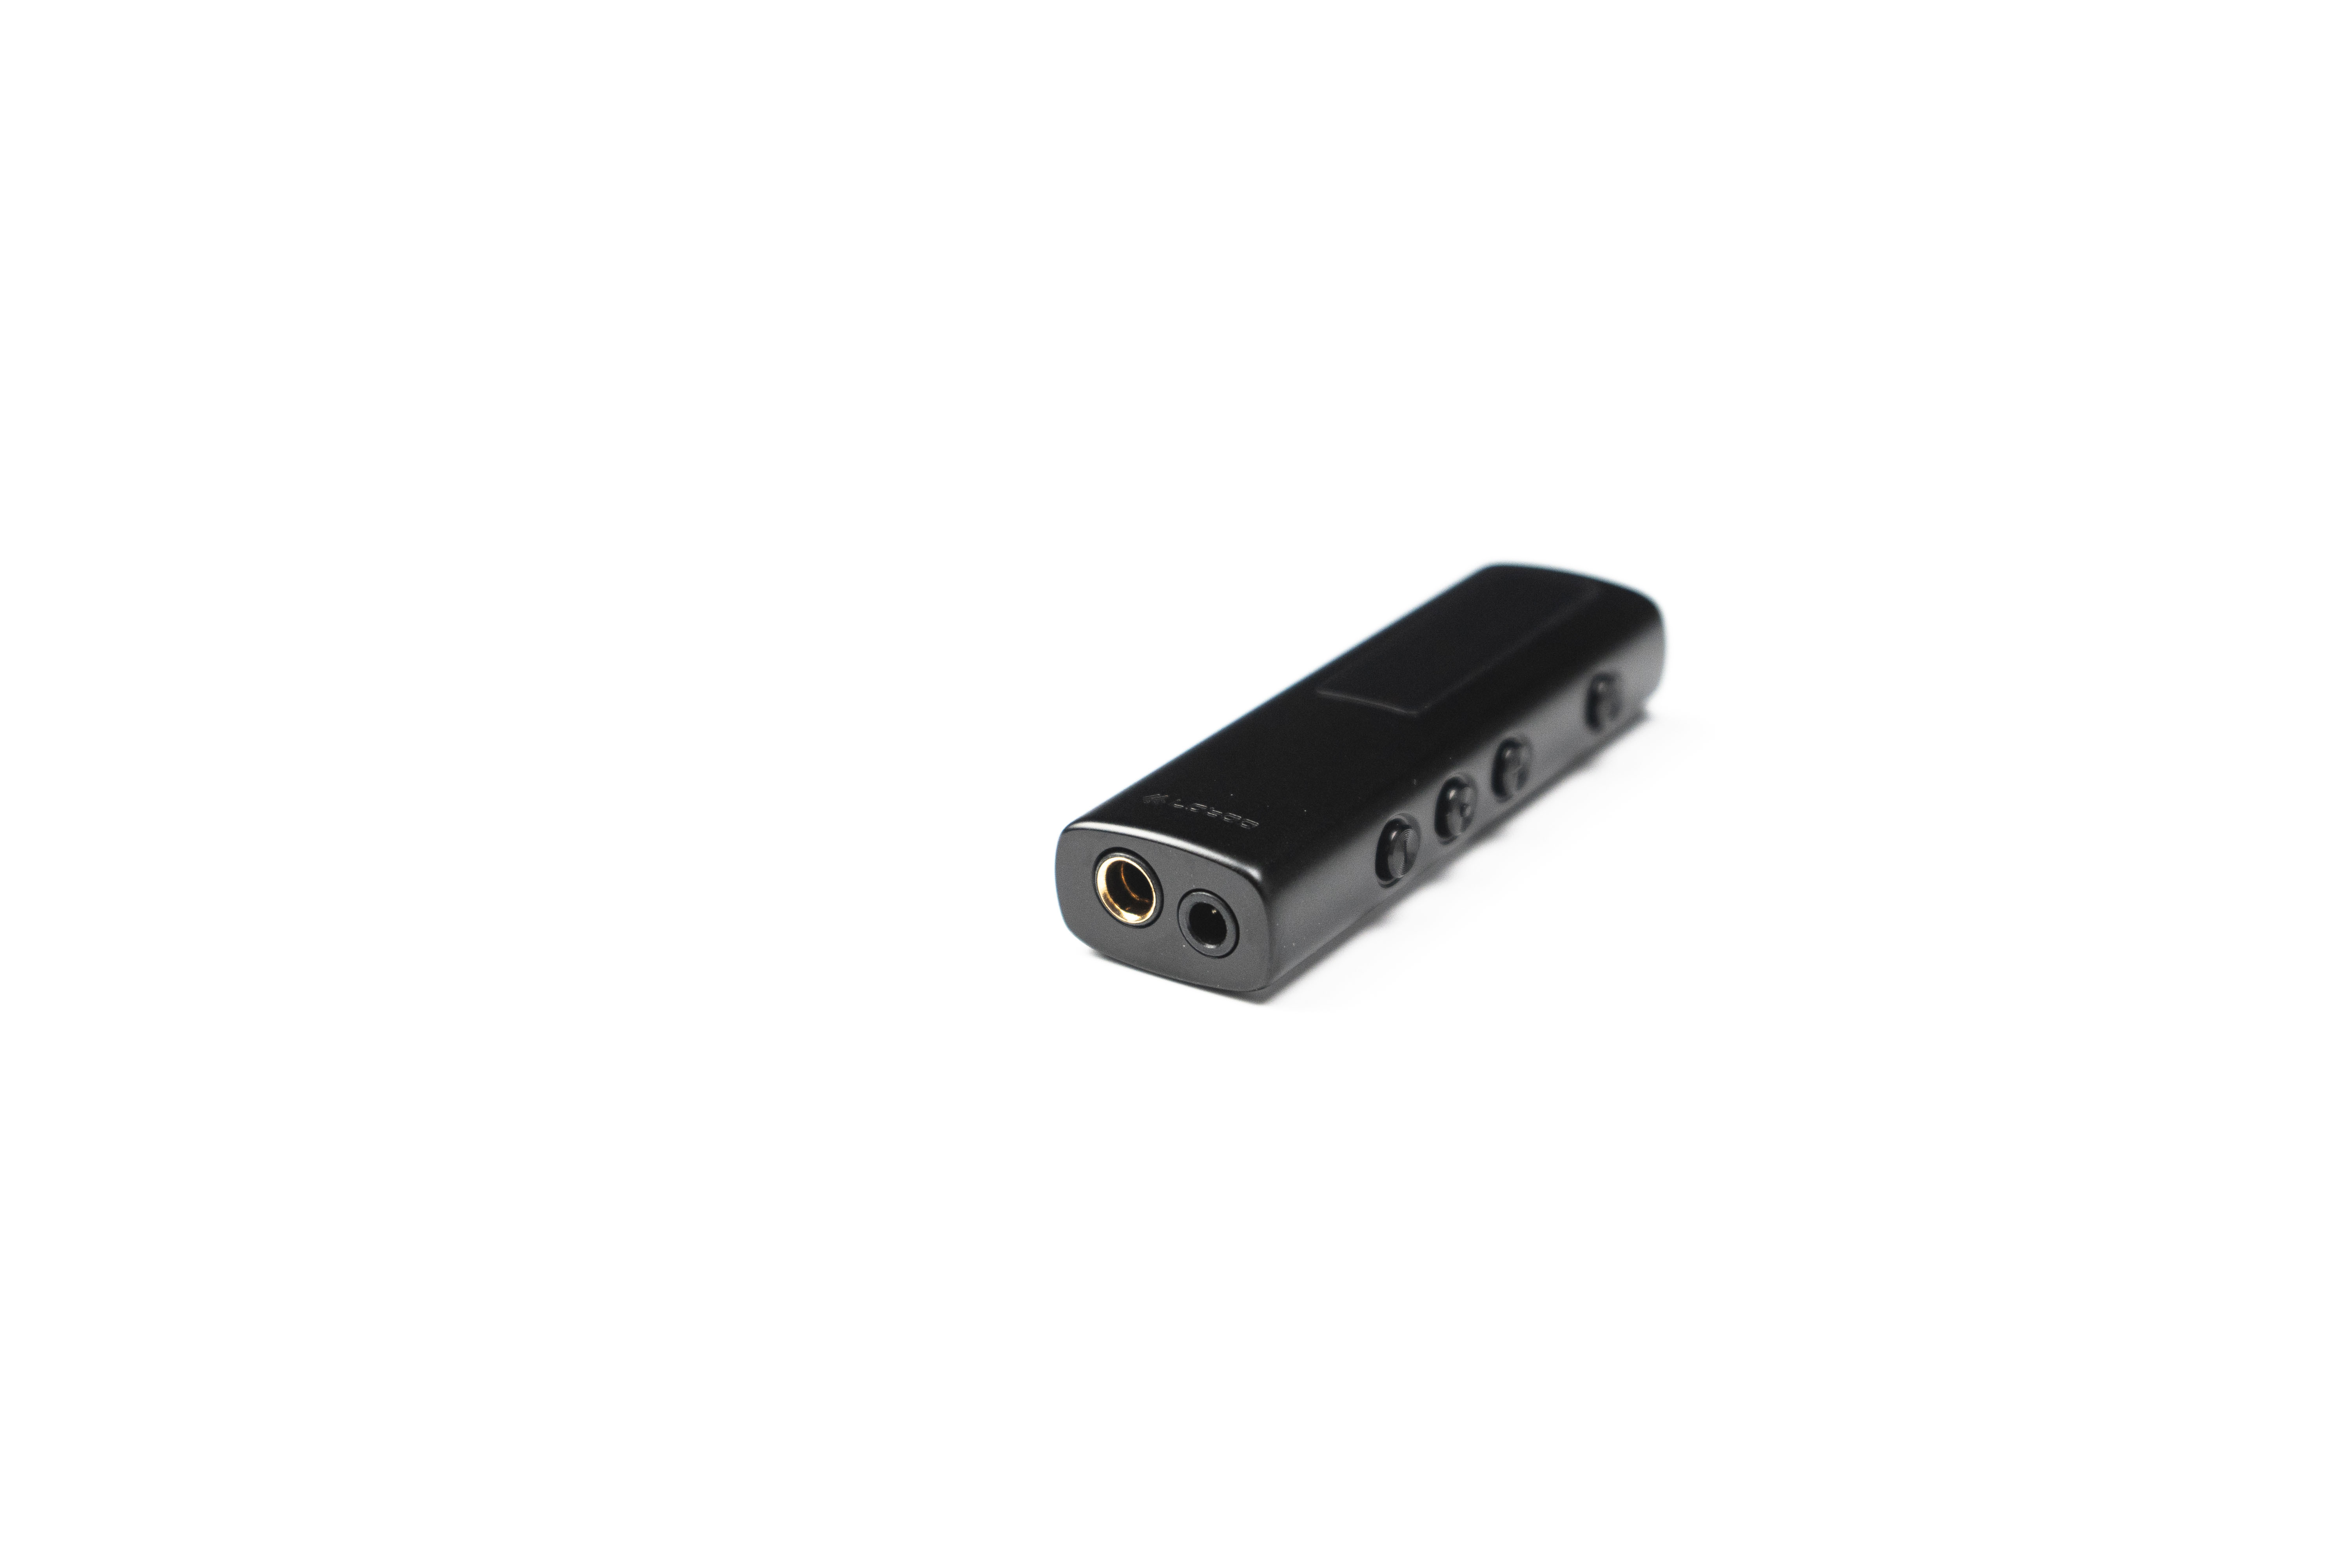 Lotoo PAW S2 USB便攜解碼耳擴